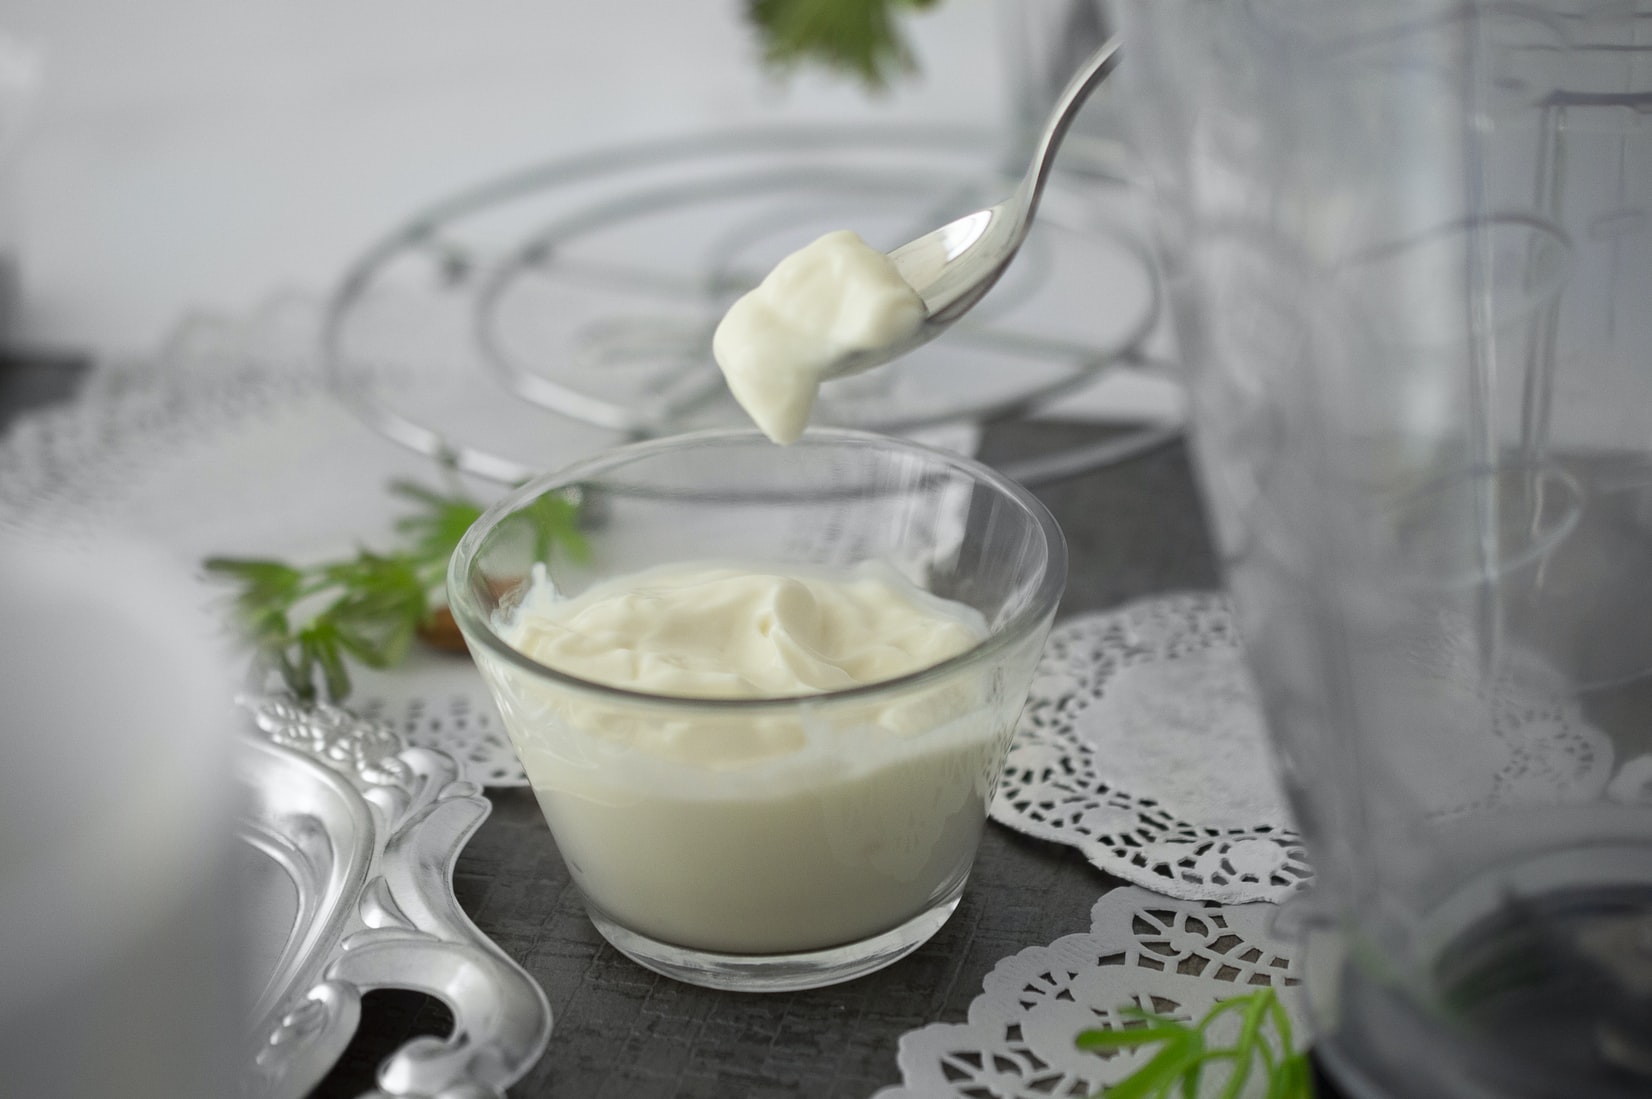 Kandungan dalam yogurt dapat mencerahkan kulit. (Foto: unsplash.com/saracervera)